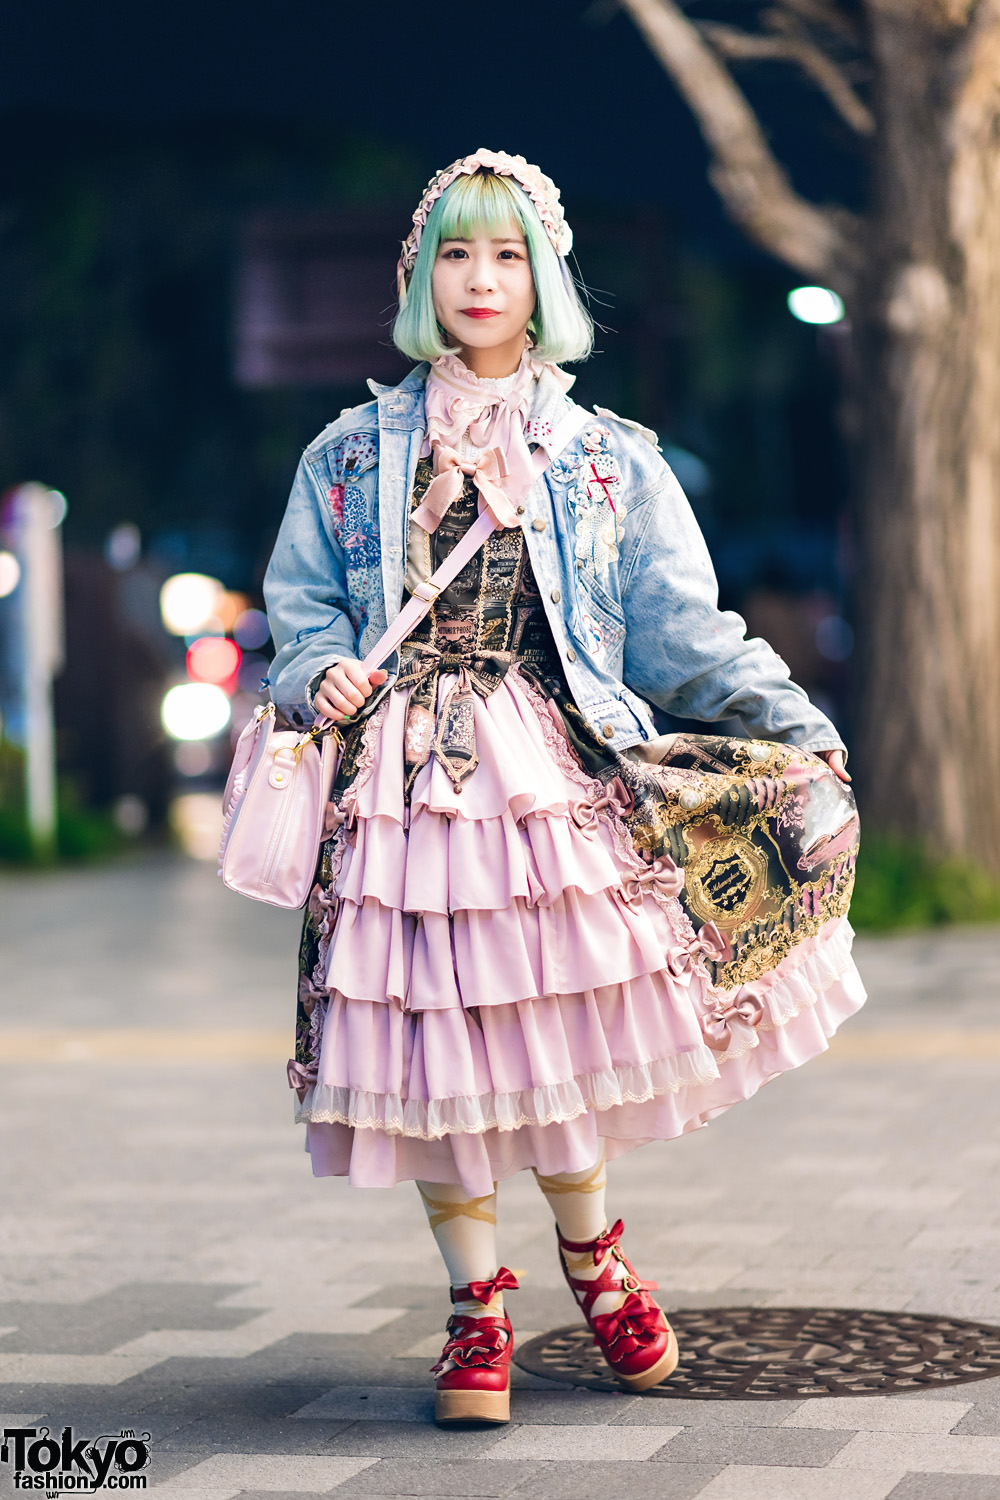 Harajuku Metamorphose Temps De Fille Lolita Street Style w/ Green Hair, Vintage Denim Jacket, Pleated Headpiece, Satchel Bag & Bow Shoes